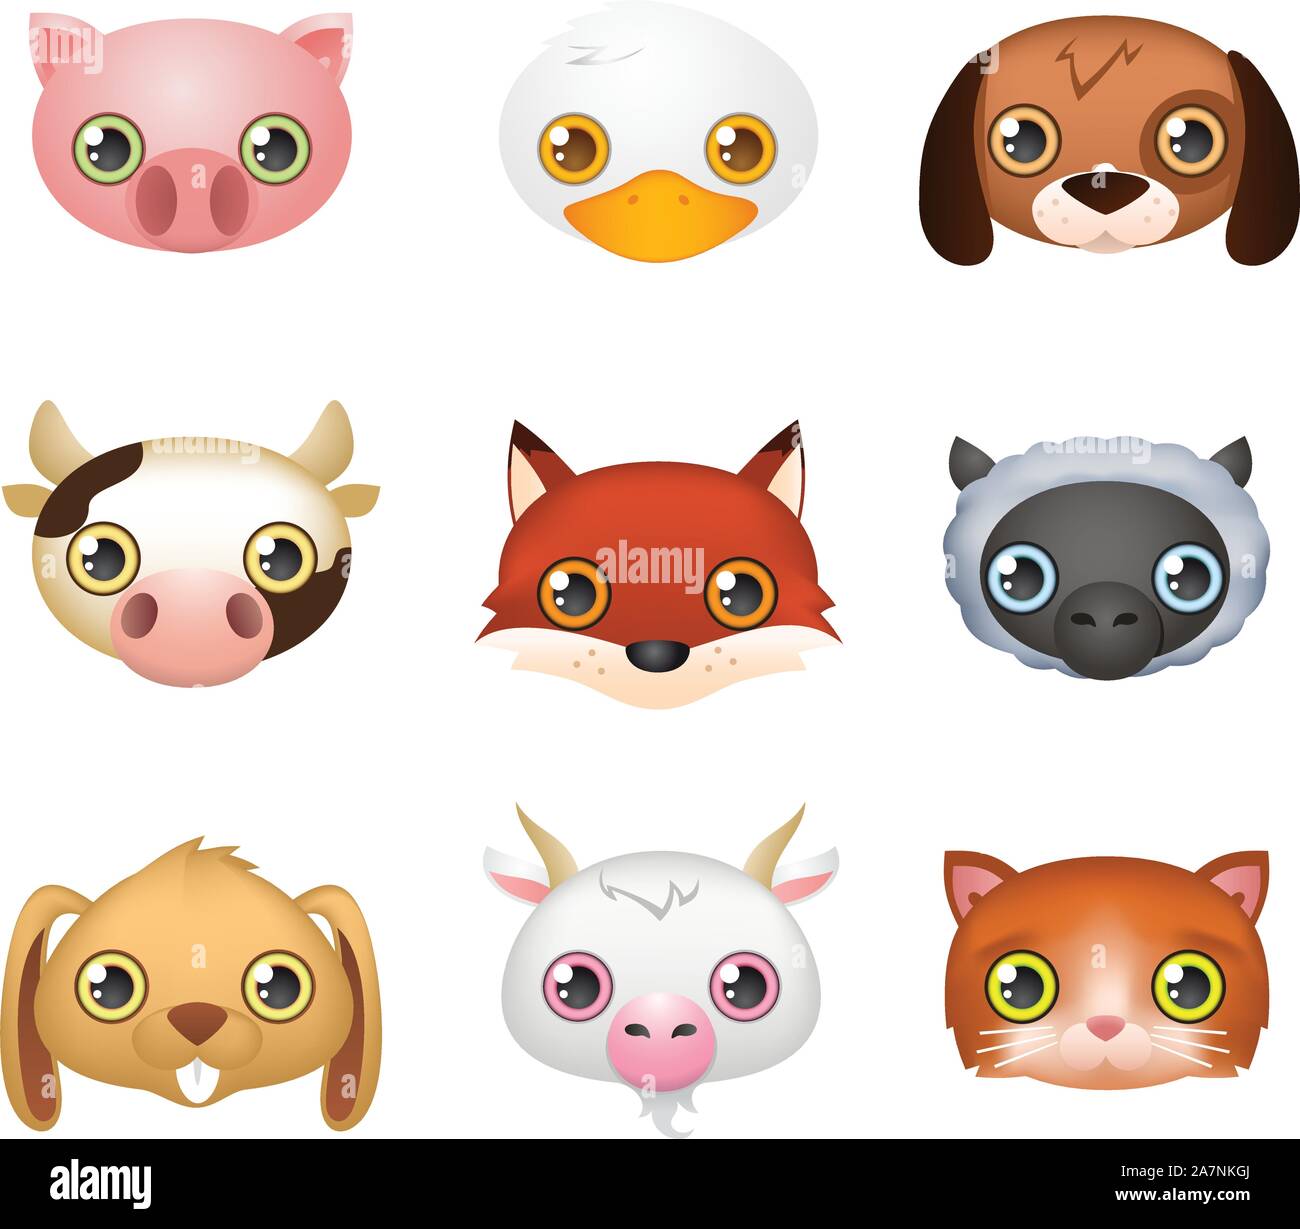 Cute farm animal faces like: Fox, Dog, Duck, Cow, Rabbit, Goat, Sheep, Pig and Lamb vector illustration. Stock Vector